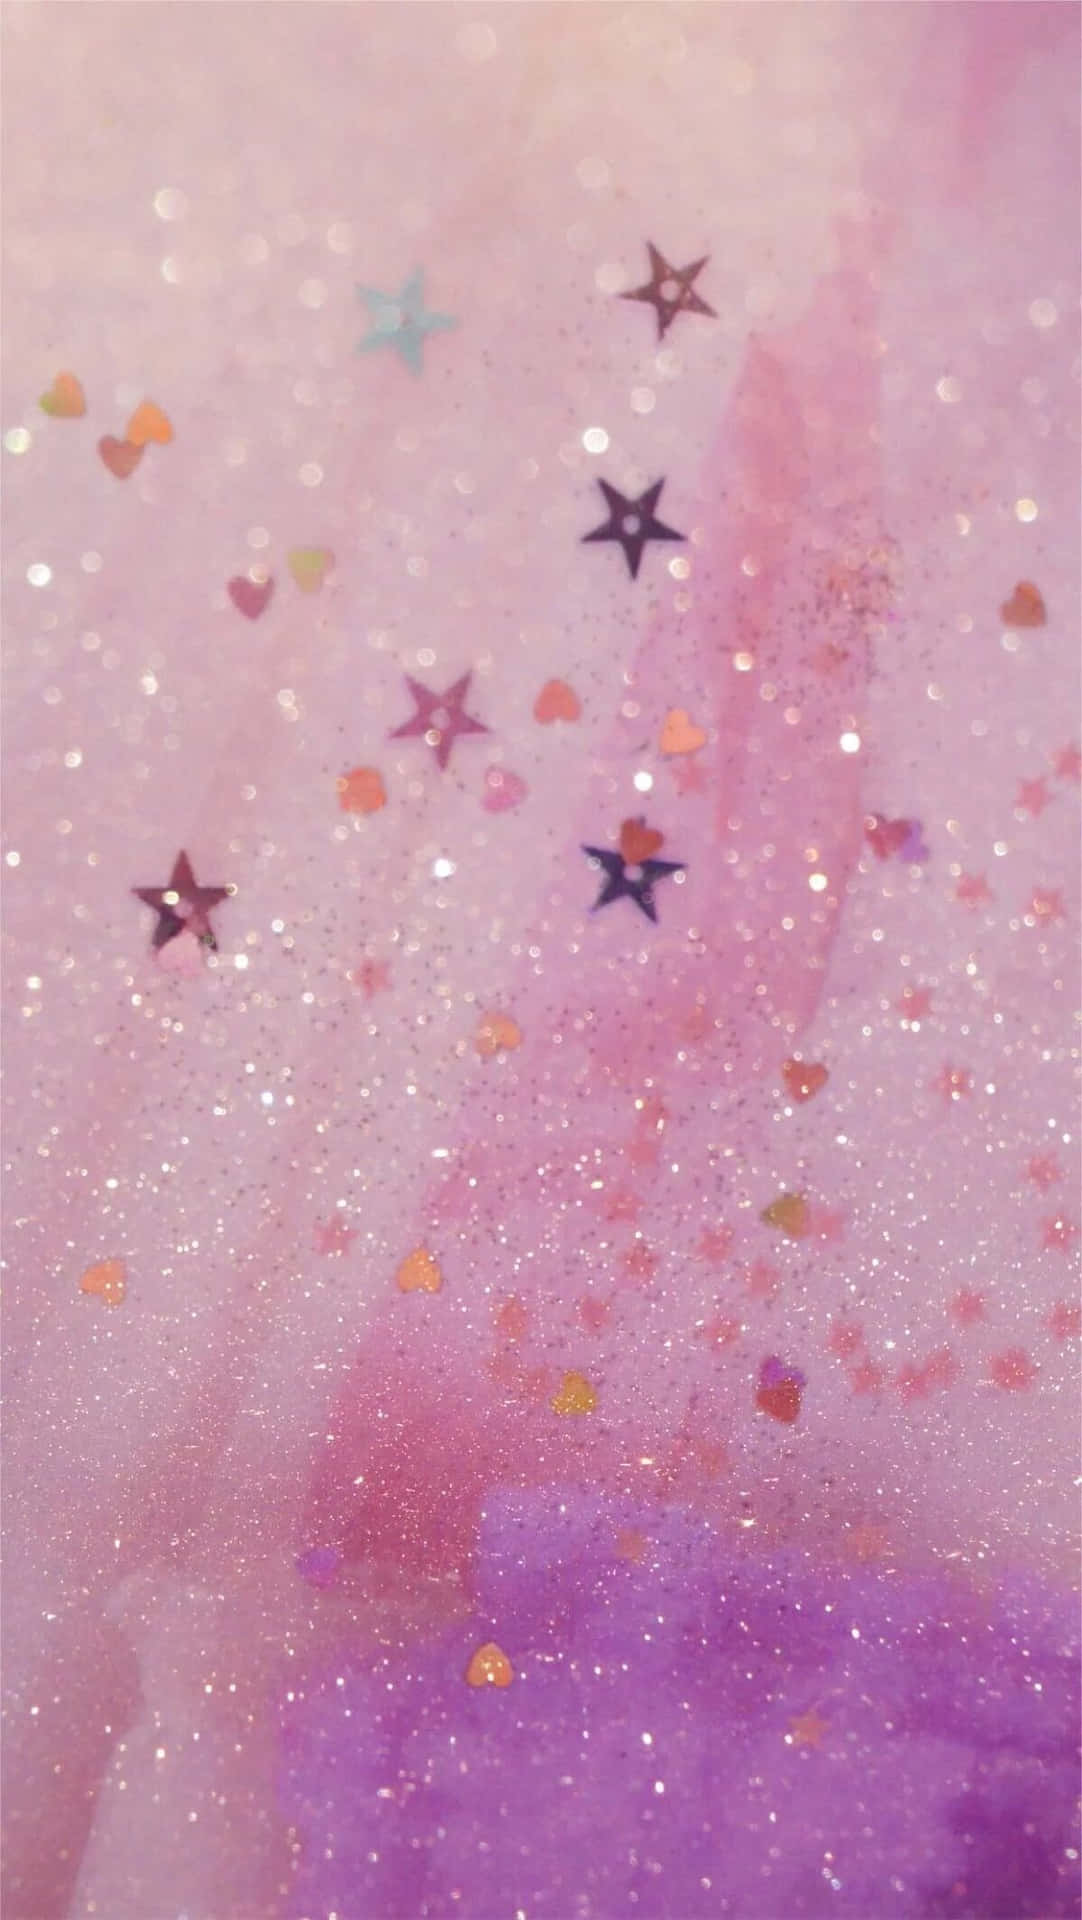 Udforsk Glitter Galaxy og beundre dets skinnende vidundere. Wallpaper